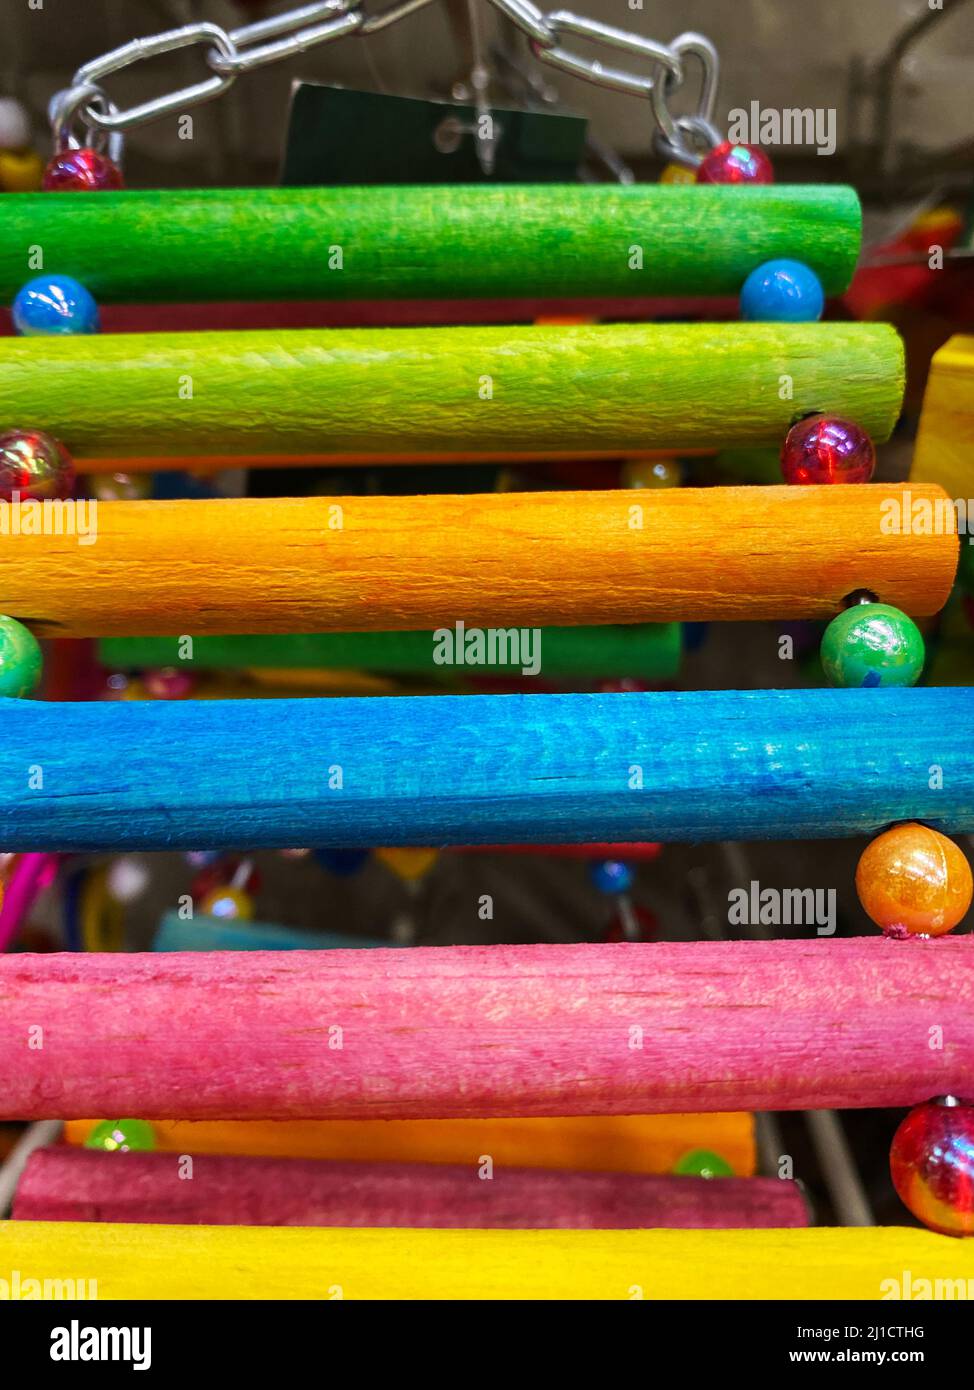 Juguete de madera, pintado en diferentes colores, con acabados coloridos para un trabajo lúdico, Foto de stock